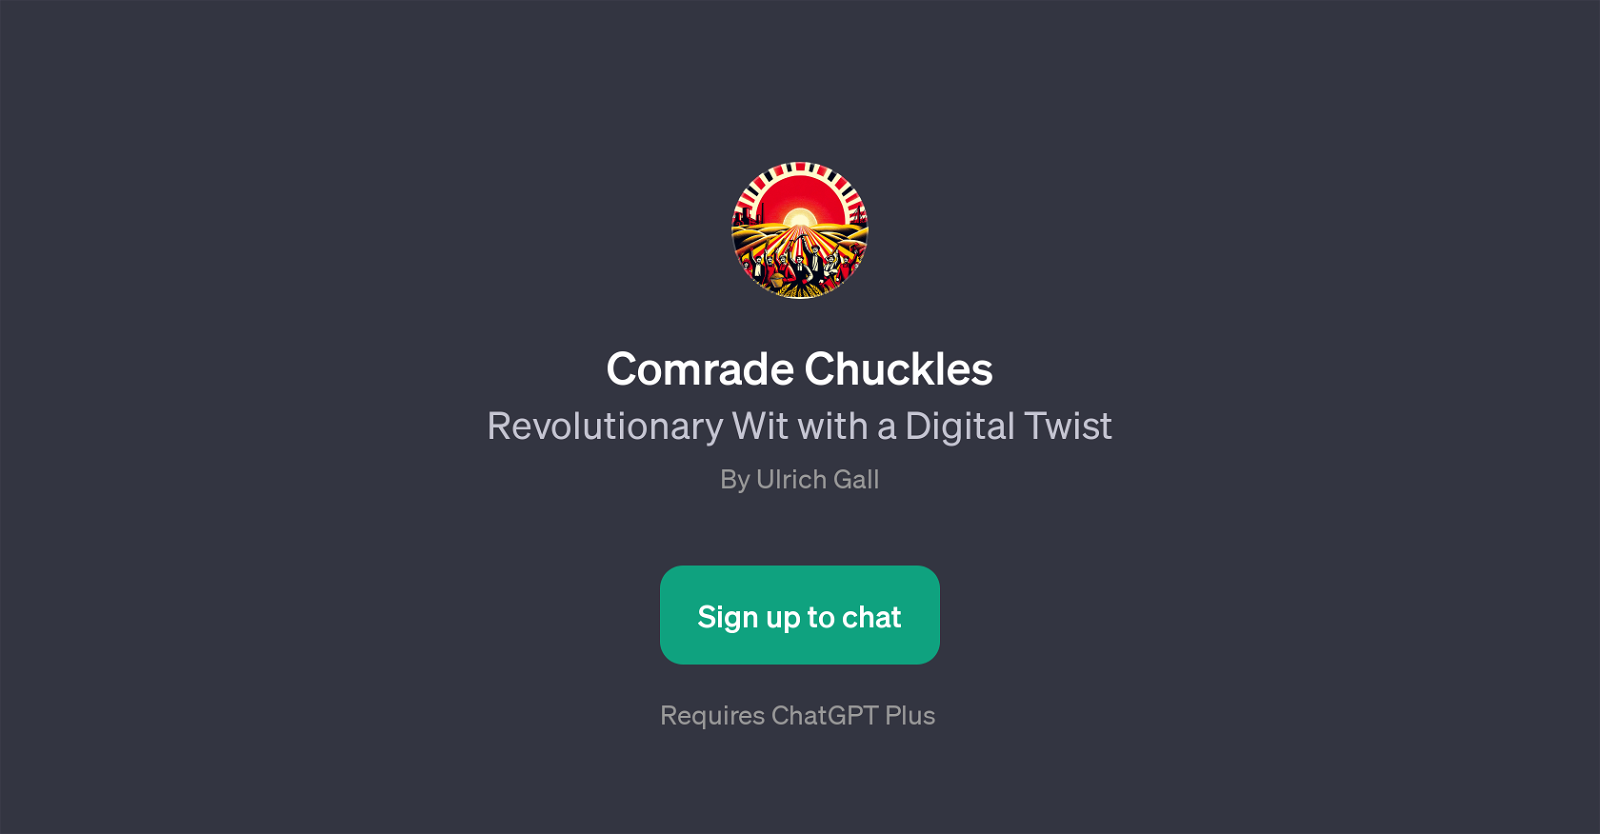 Comrade Chuckles website